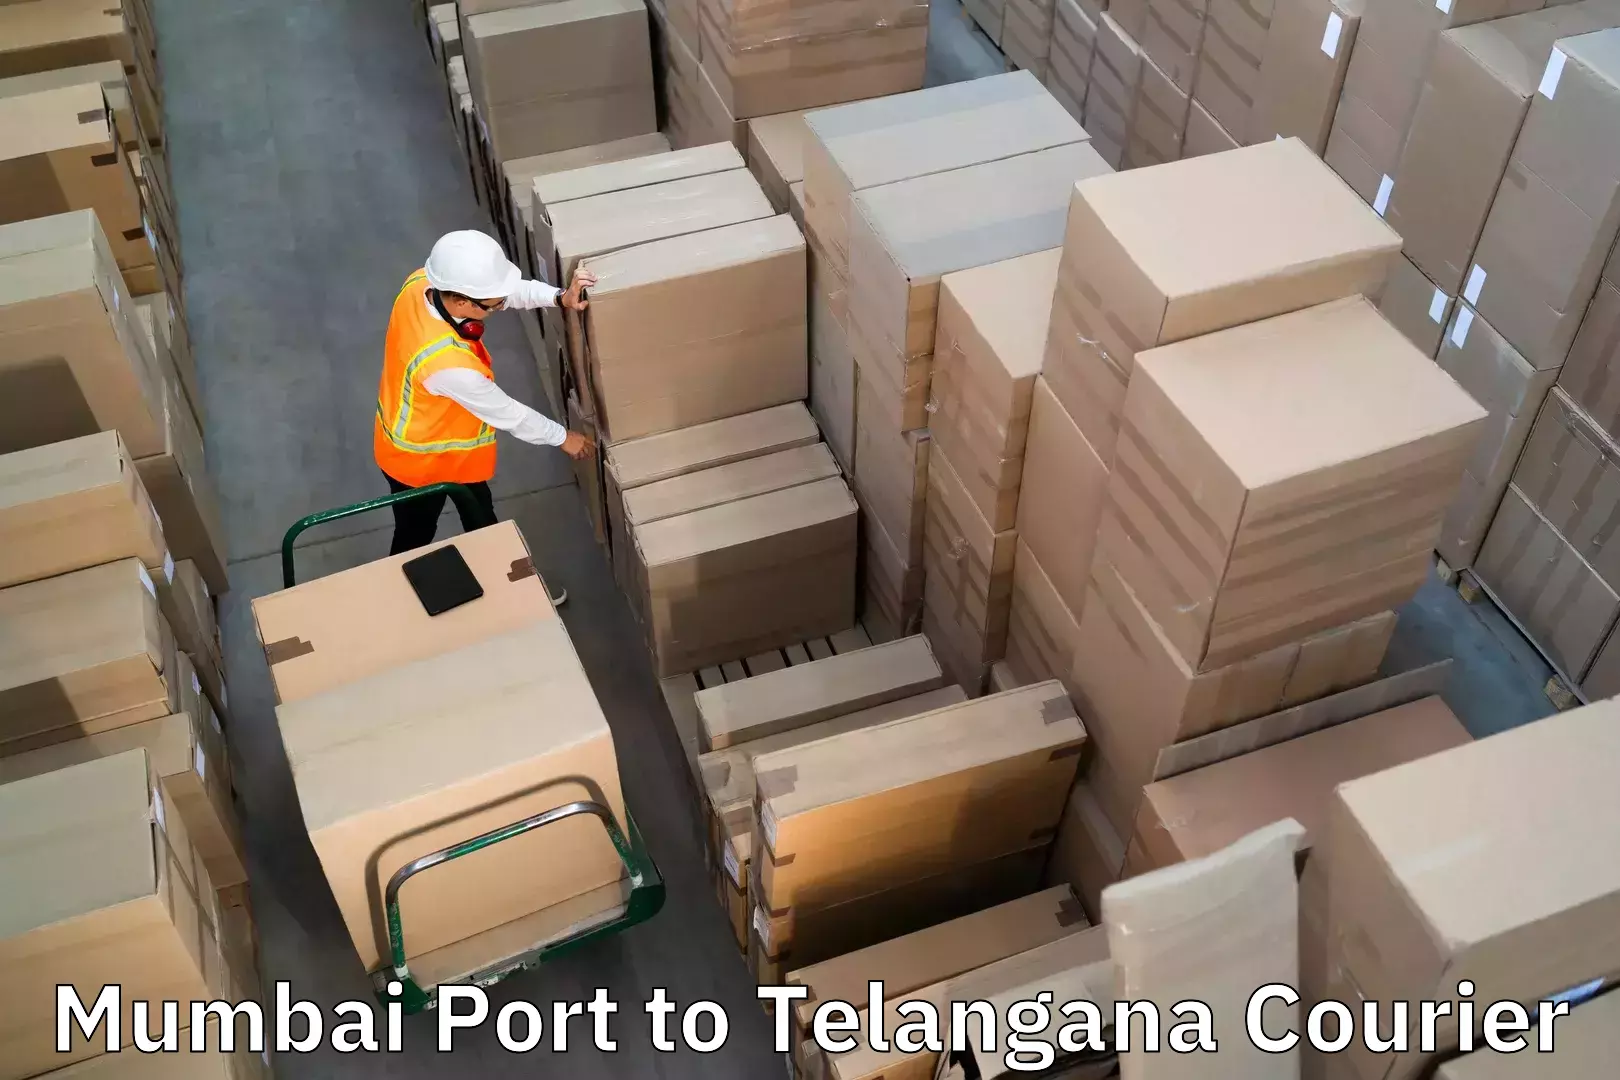 Luggage shipment specialists Mumbai Port to Nirmal